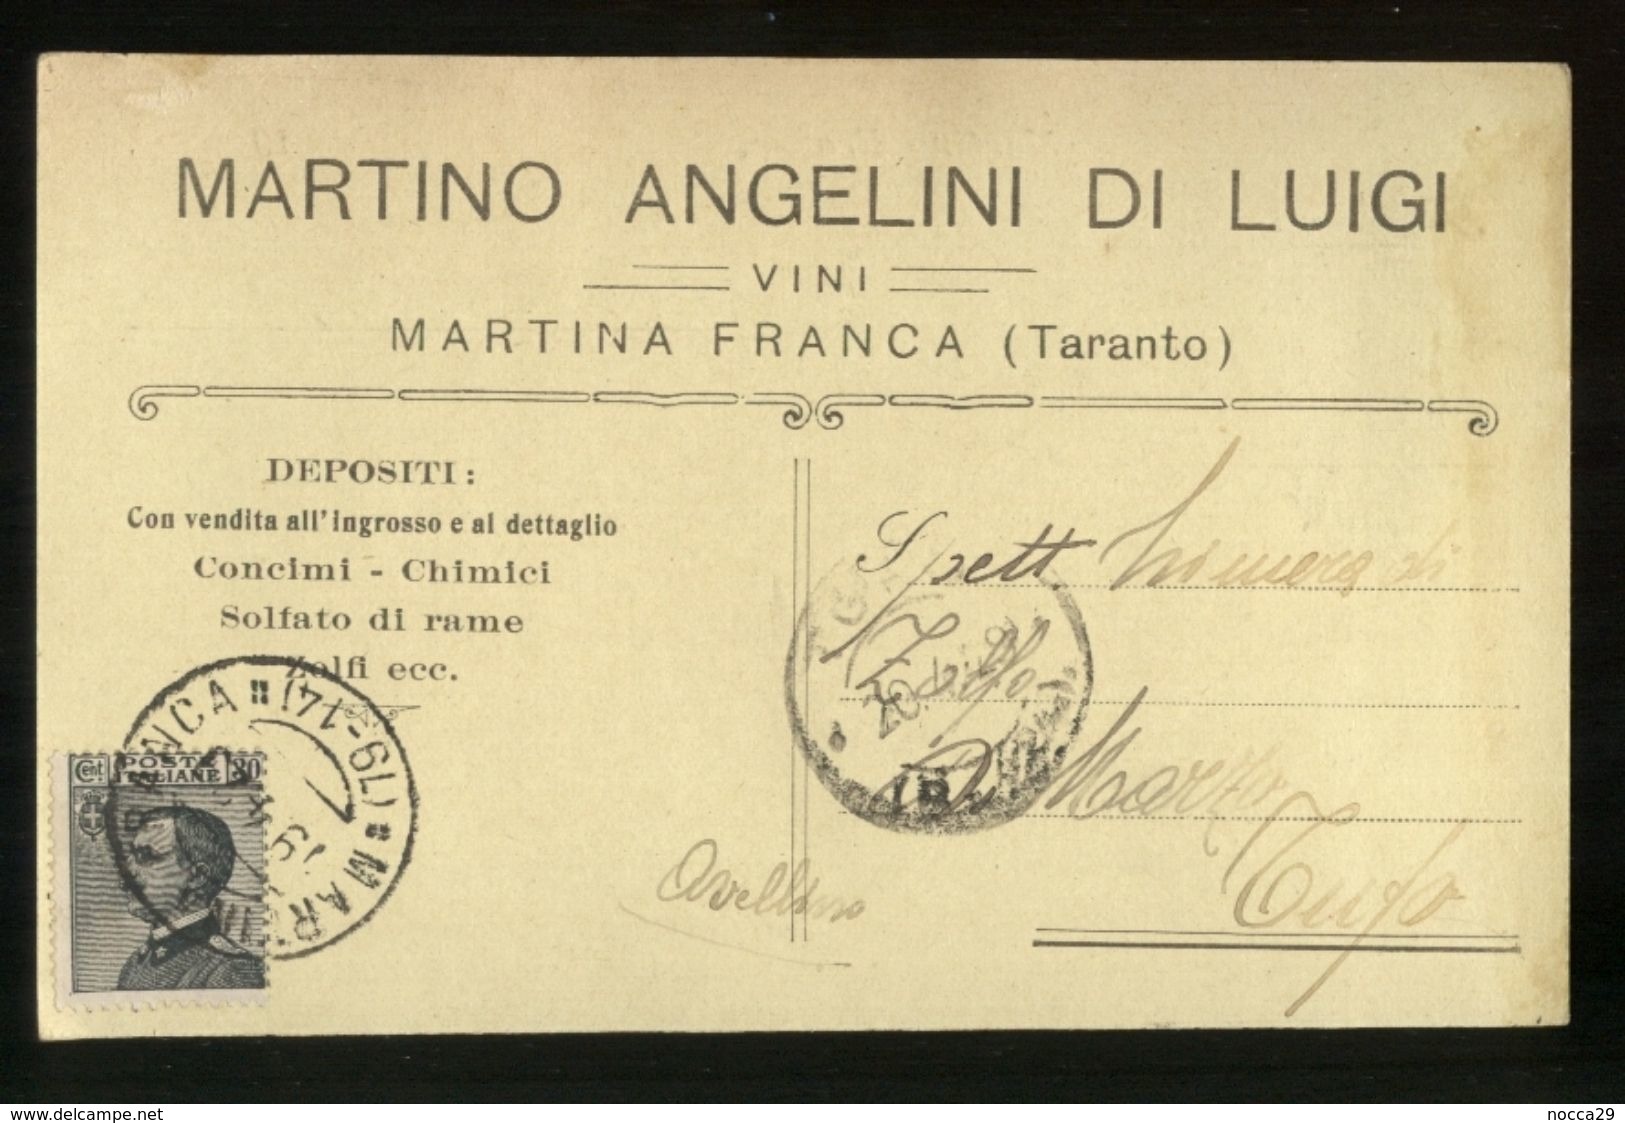 MARTINA FRANCA - TARANTO  - 1929 - CARTOLINA COMMERCIALE - MARTINO ANGELINI -  VINI - Negozi